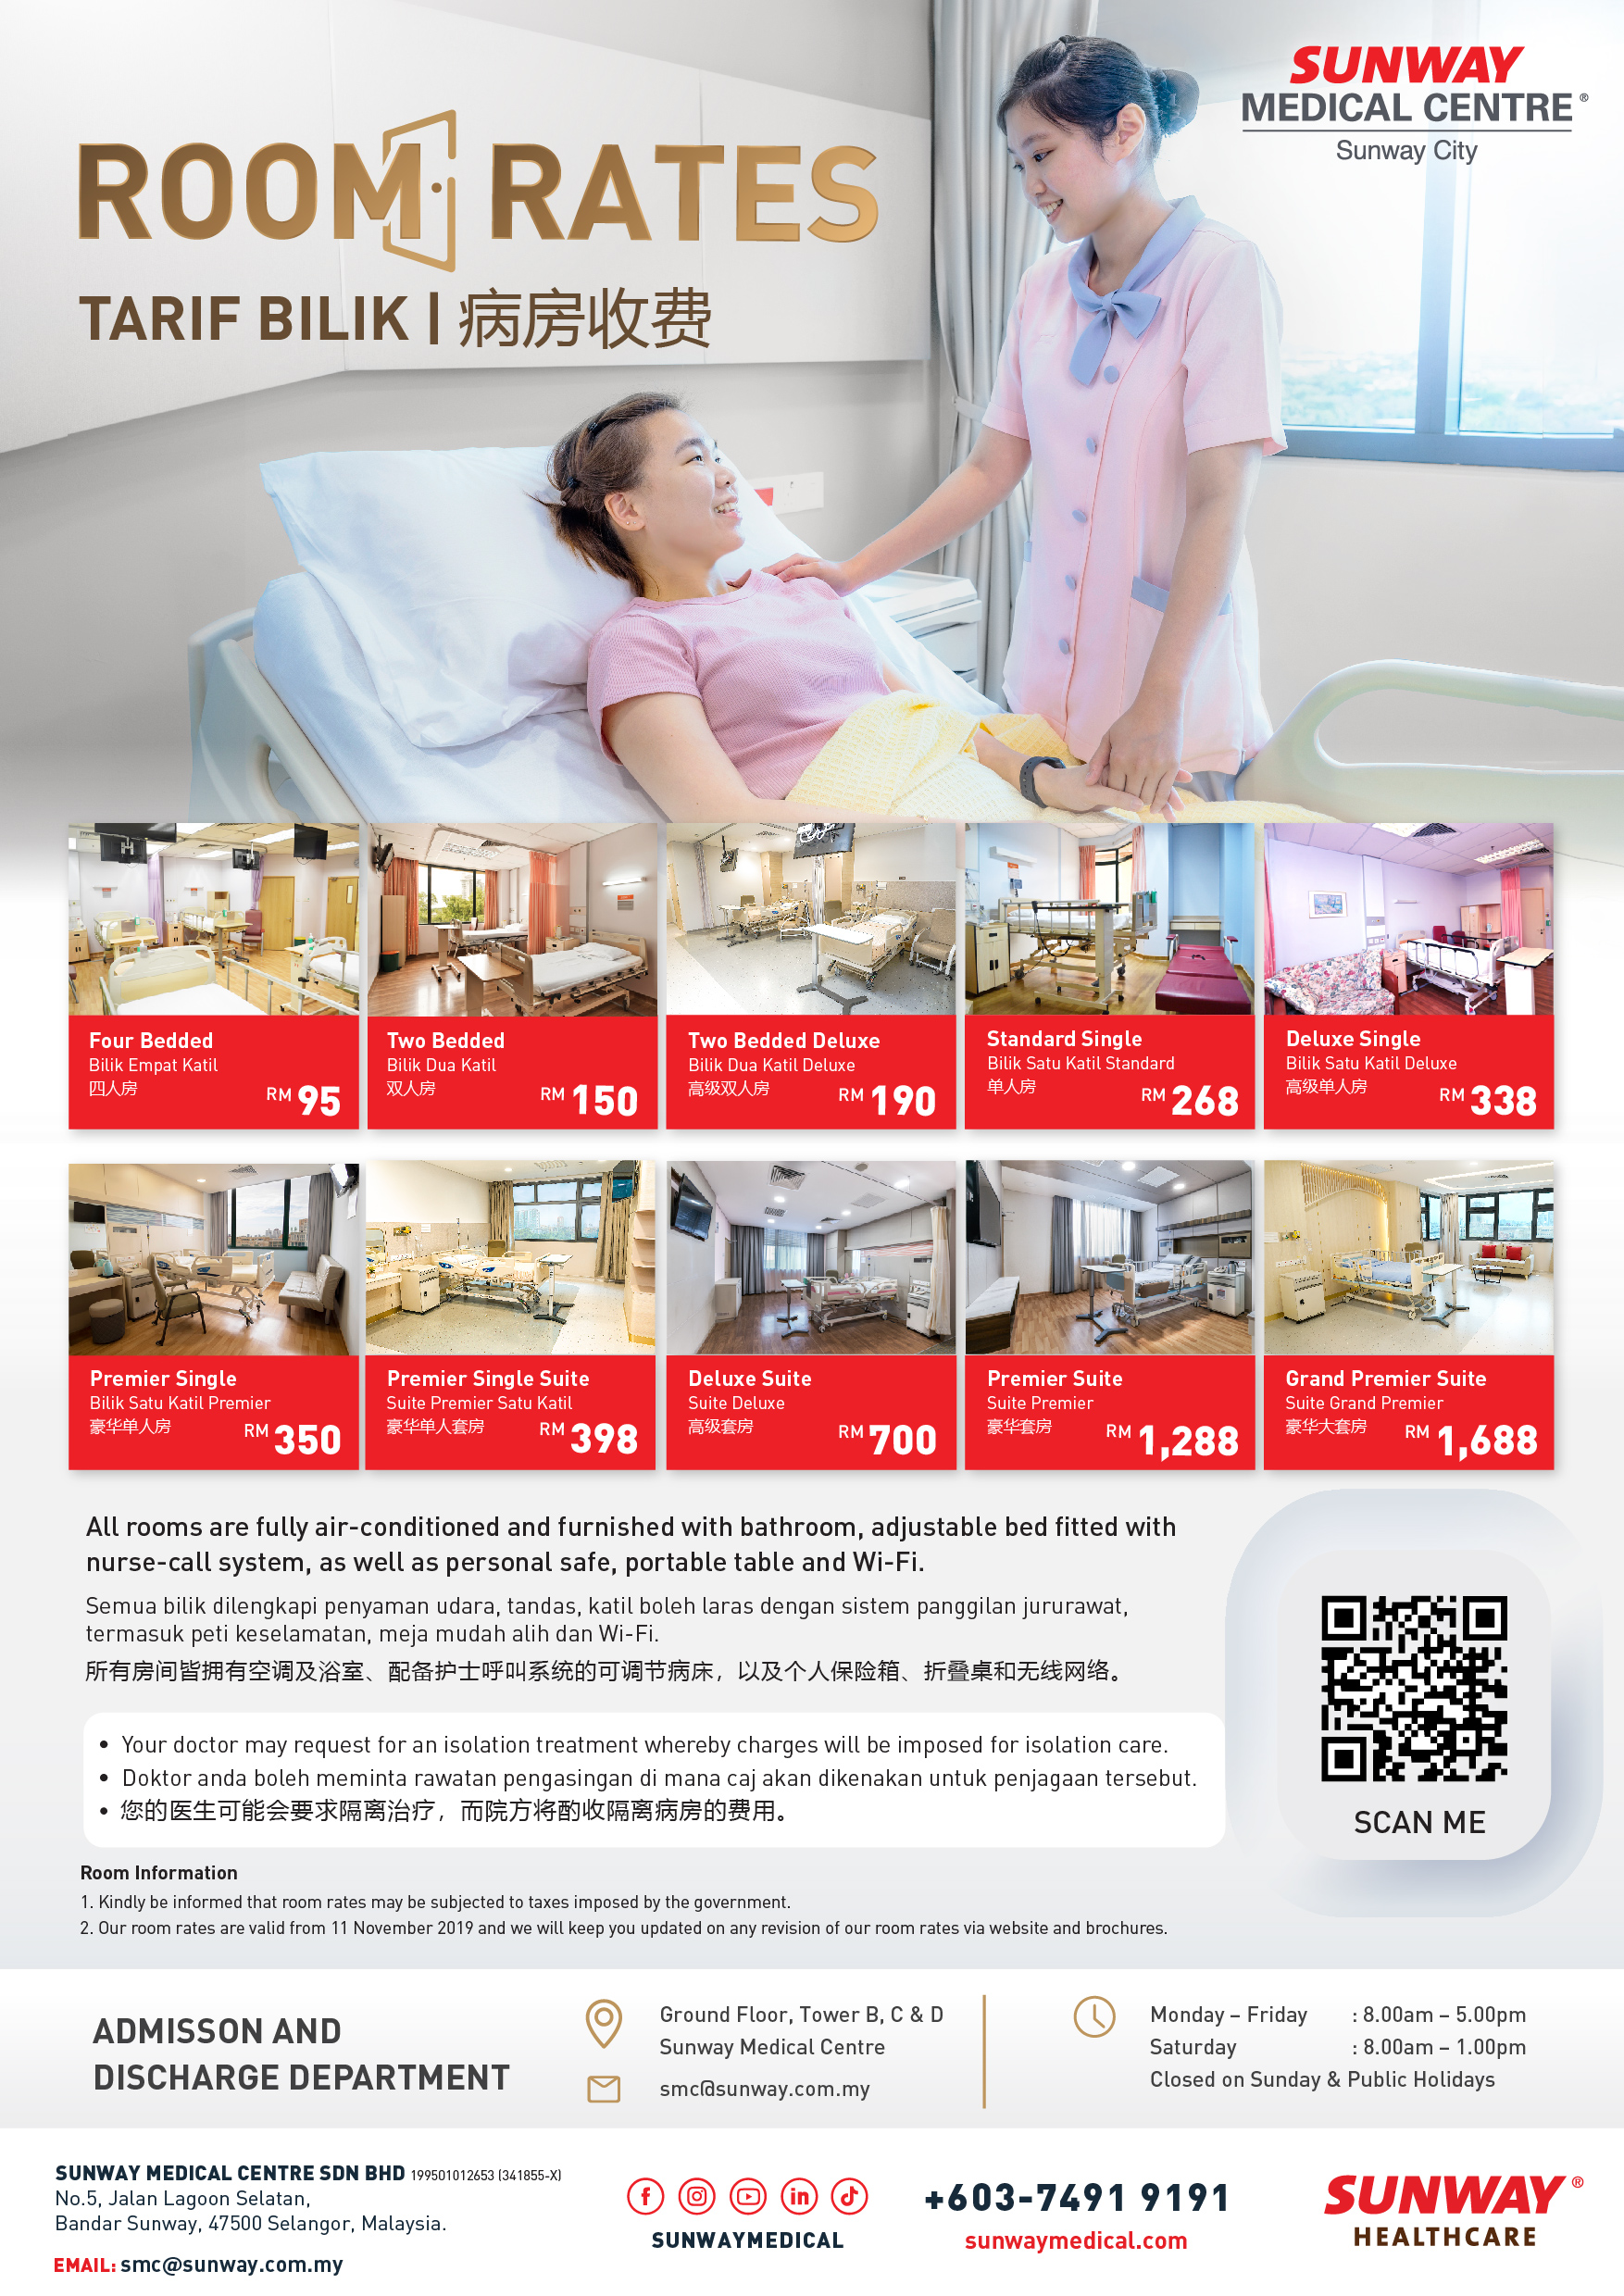 Room Rates at Sunway Medical Centre, Sunway City